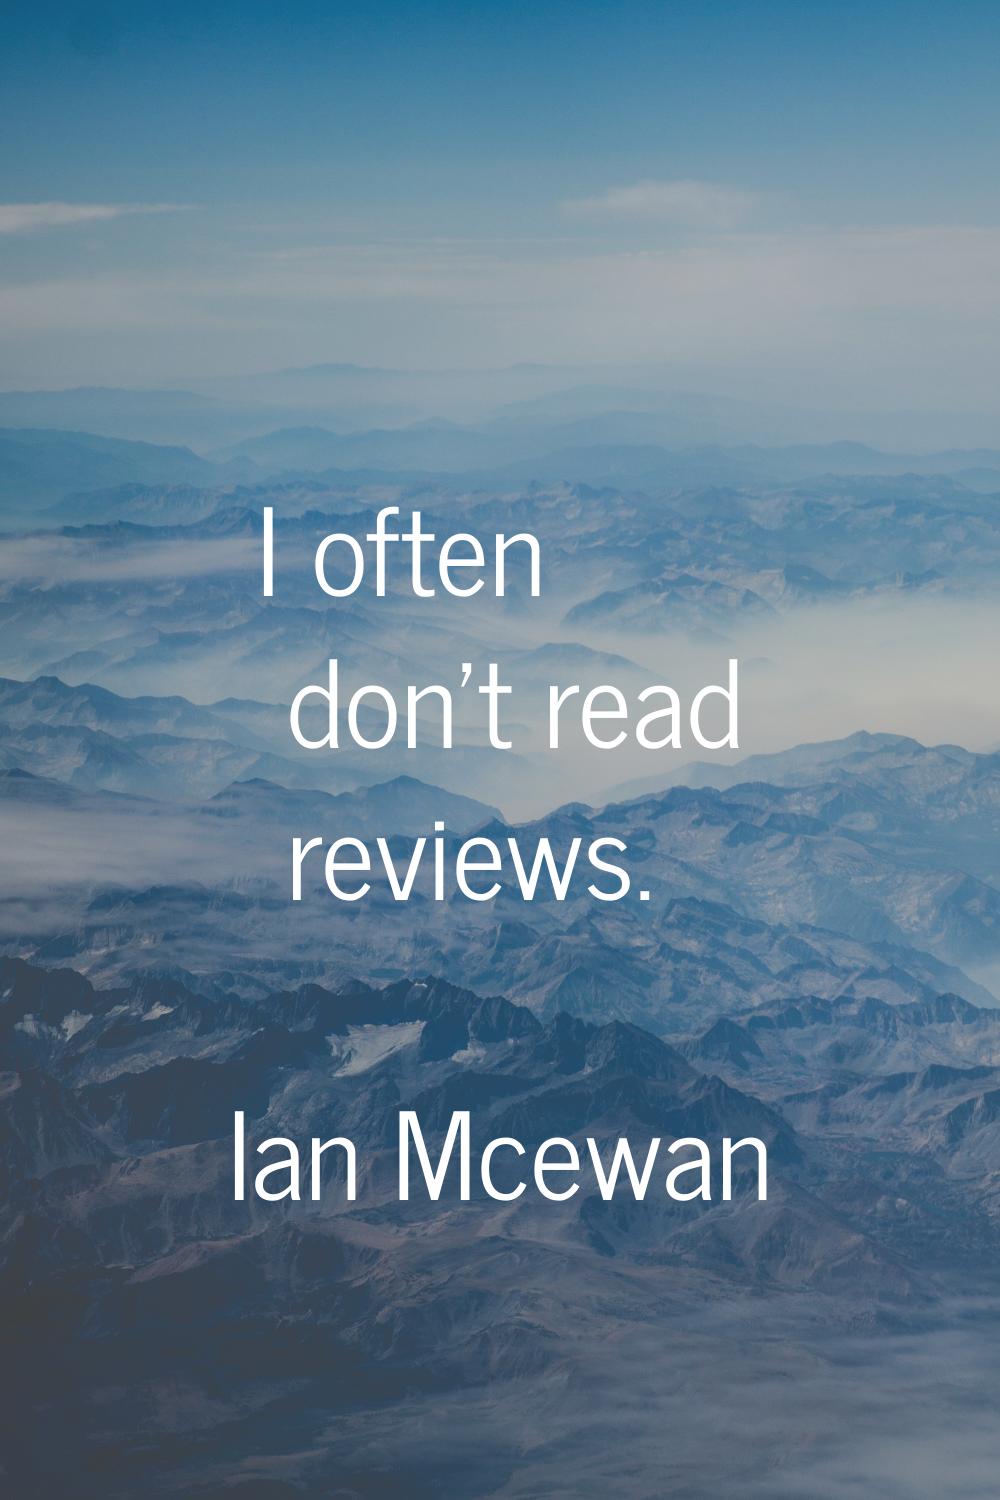 I often don't read reviews.